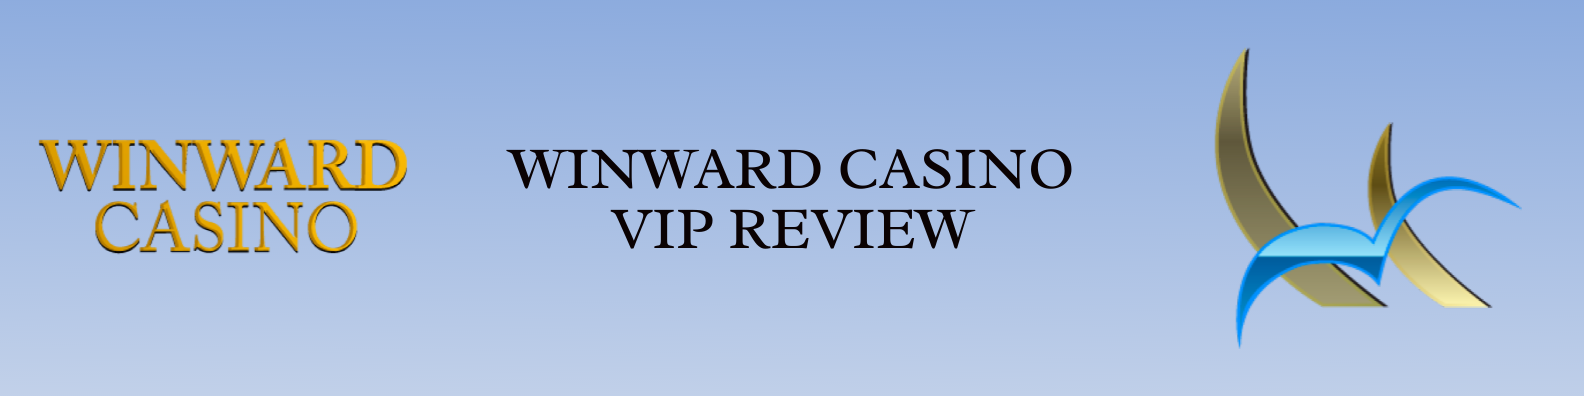 Winward Casino VIP Review